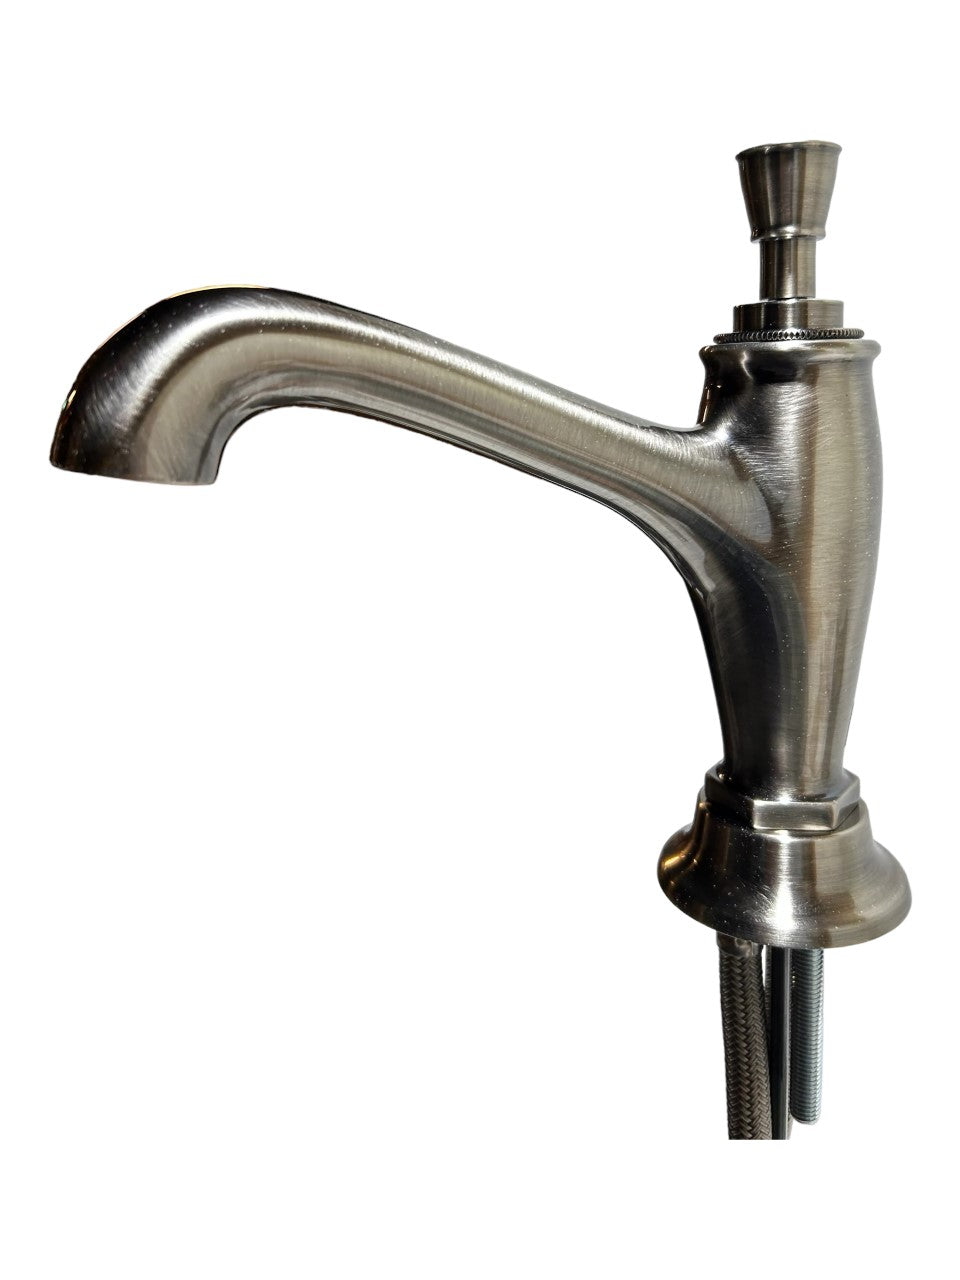 Newport Brass, 2910/15A Vander Two Handle Widespread Bathroom Sink Faucet in Antique Nickel, New in Box - FreemanLiquidators - [product_description]